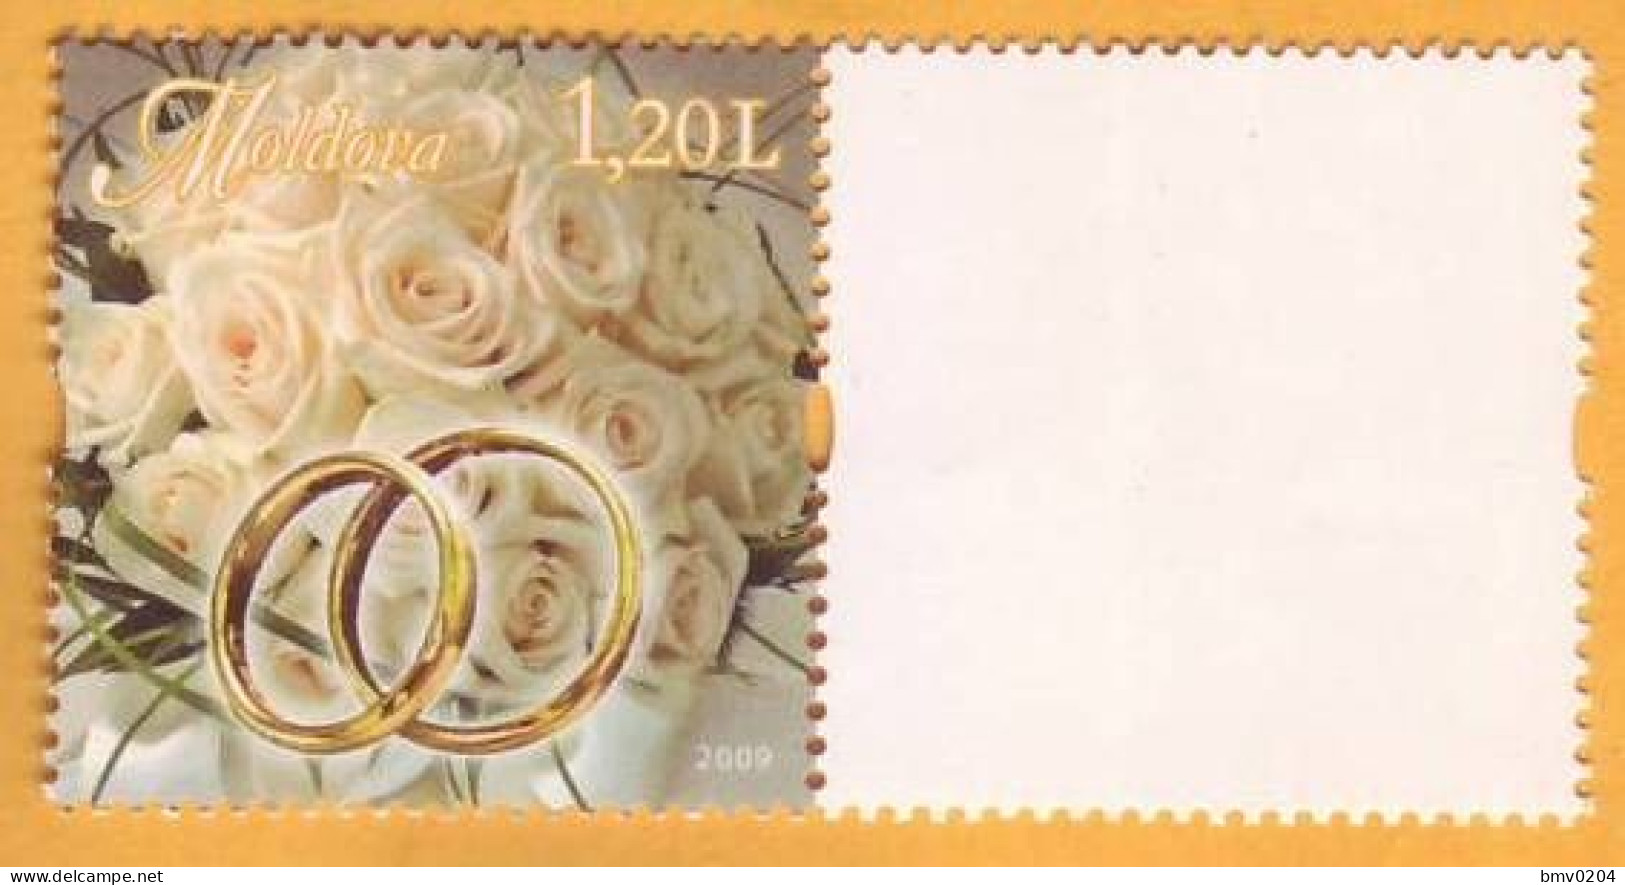 2009 2013 Moldova Personalized Postage Stamps, Issue 1.  SAMPLES.  Wedding Invitation  1v  Mint - Moldova